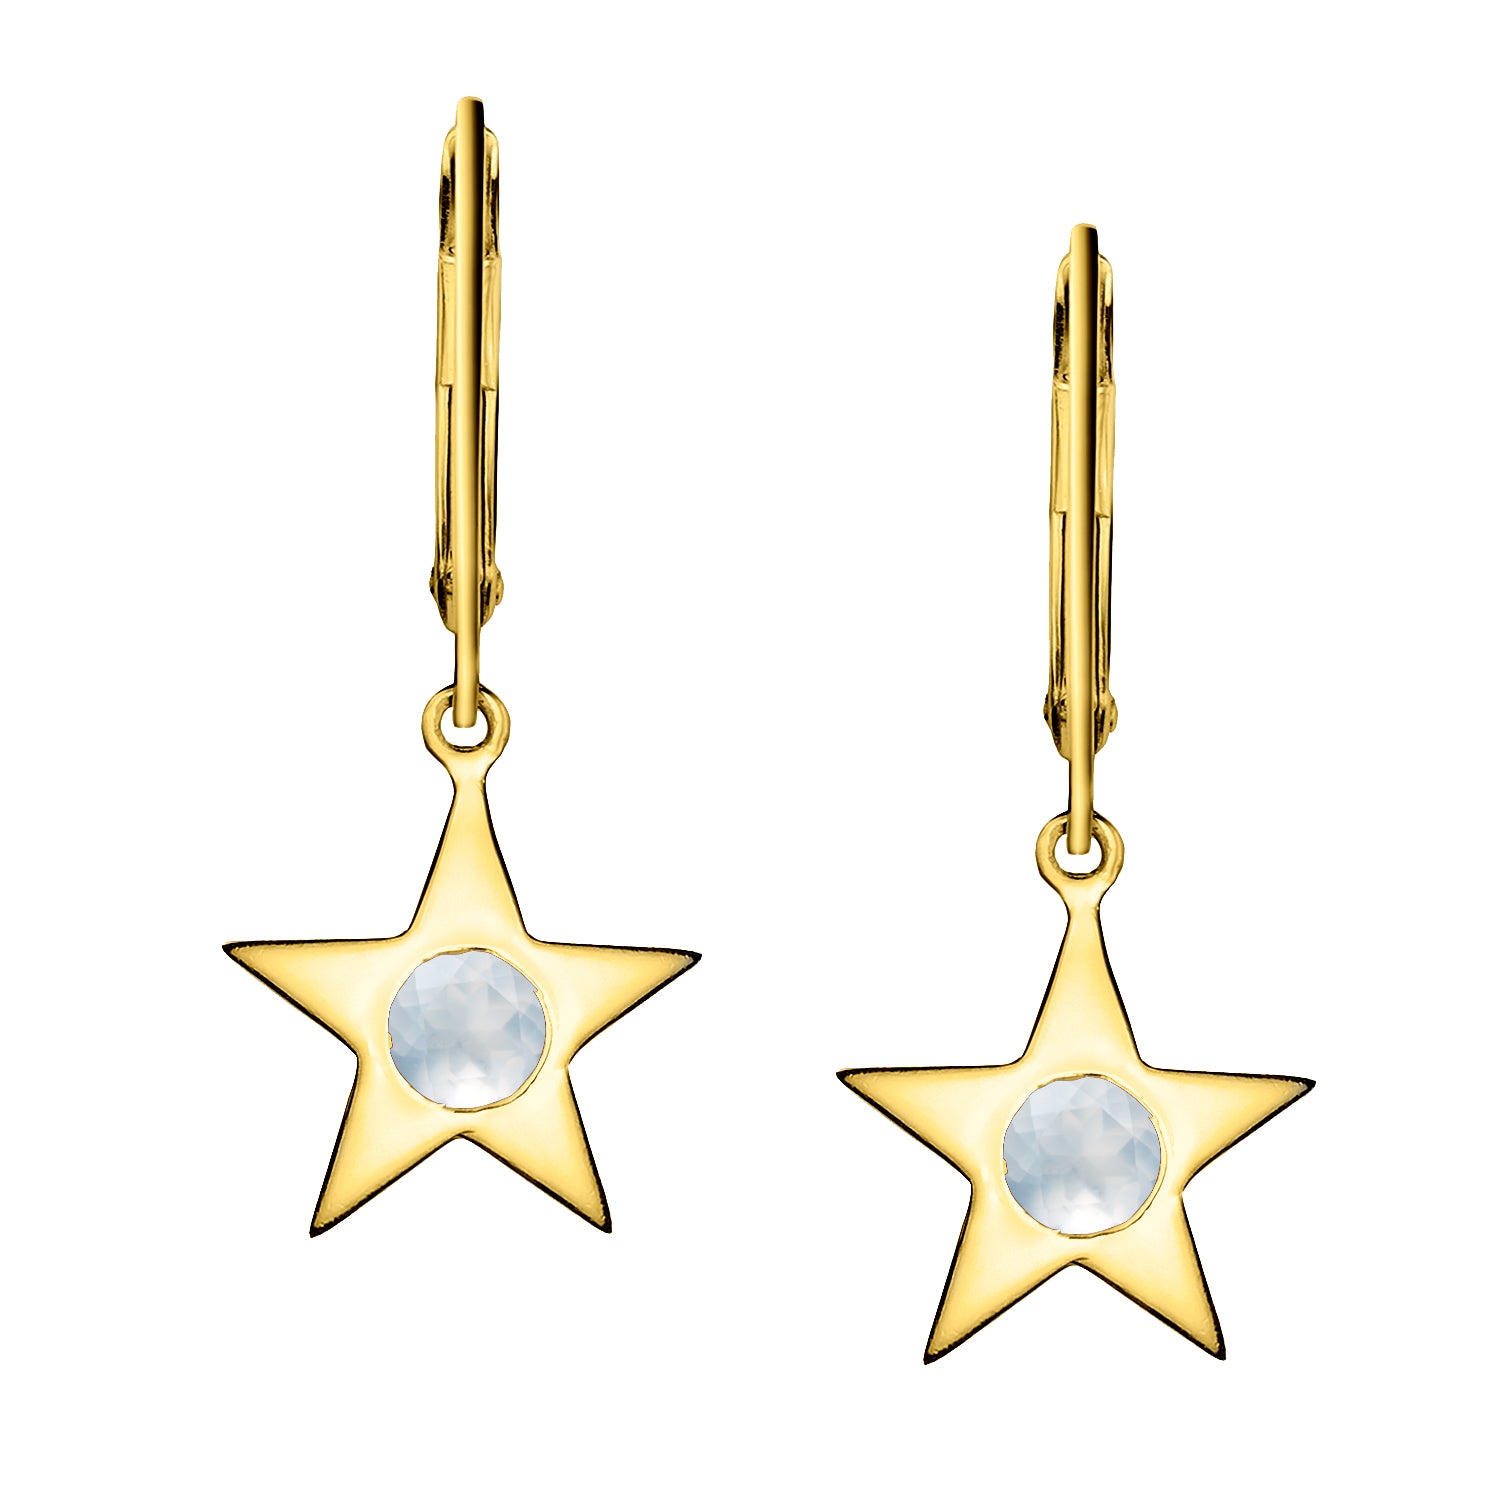 Polished Gold Vermeil Star Birthstone Earrings - June / Moonstone